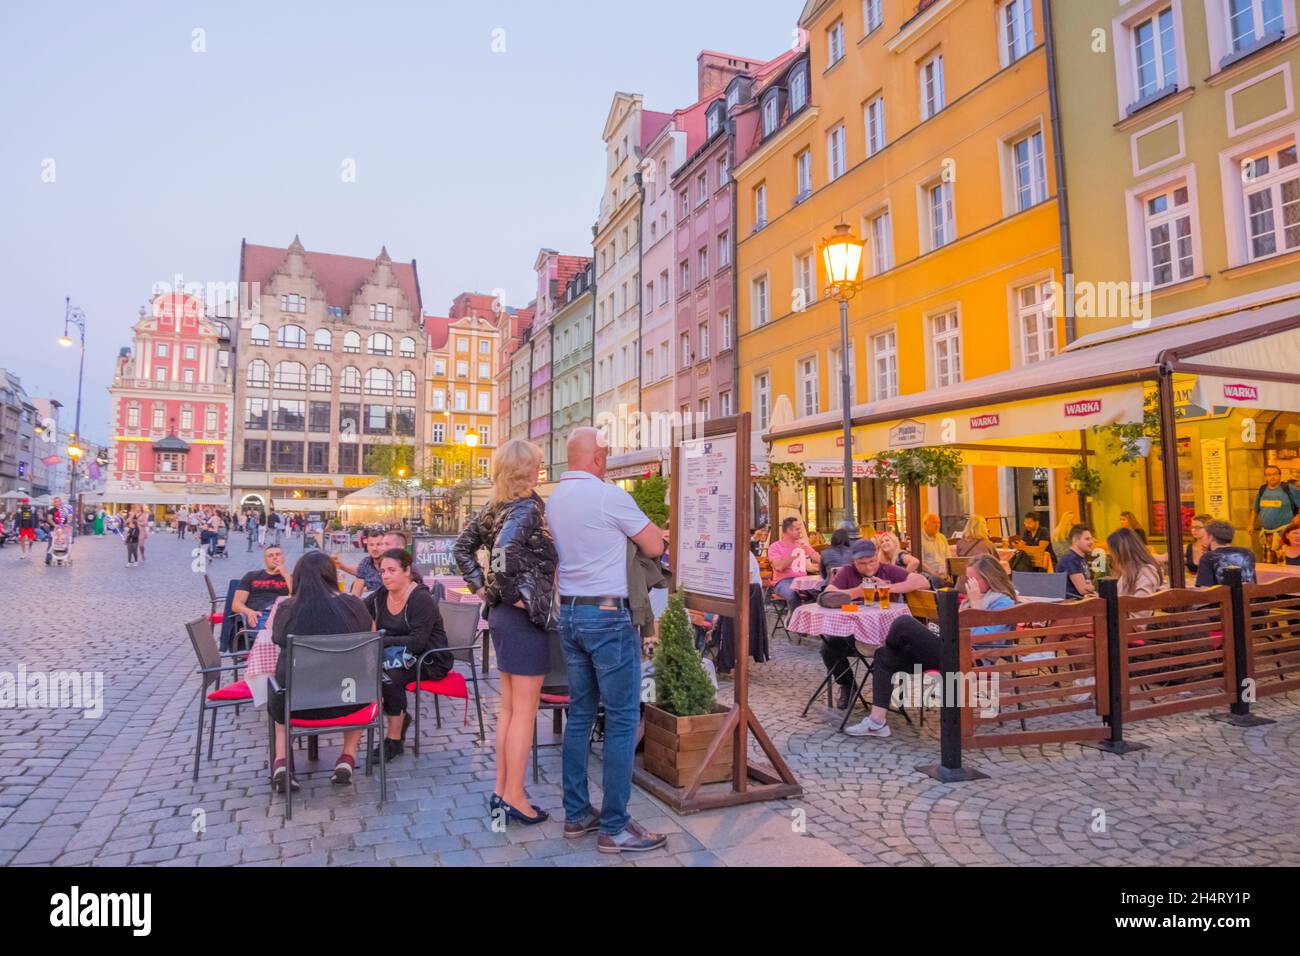 Restaurante terrazas, Rynek, plaza del mercado, casco antiguo, Wroclaw, Polonia Foto de stock